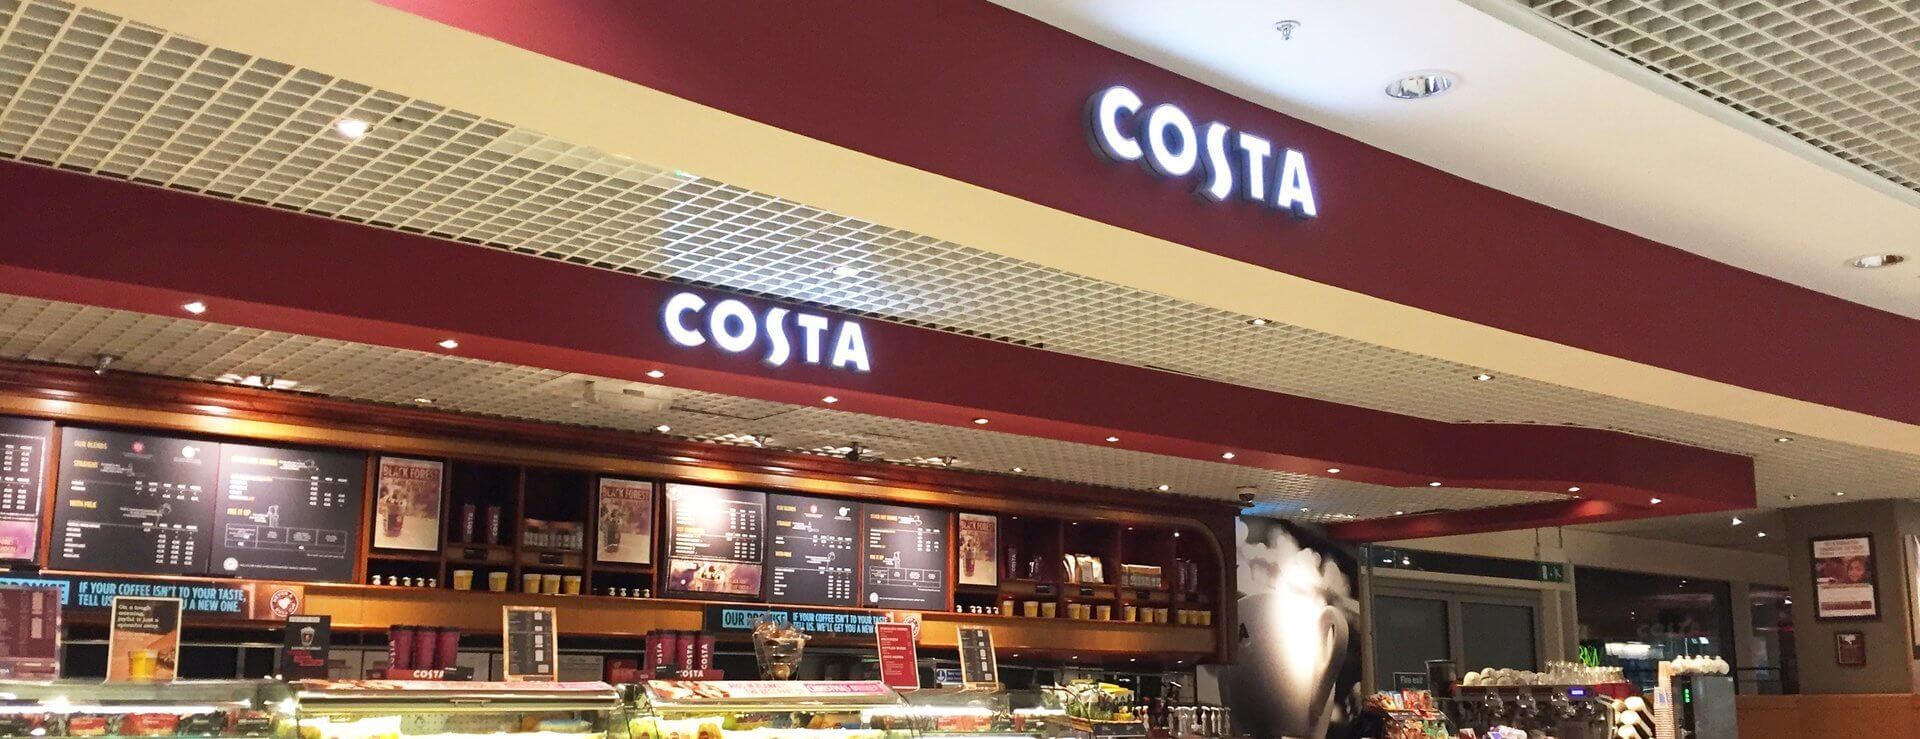 Costa Coffee at Birmingham airport